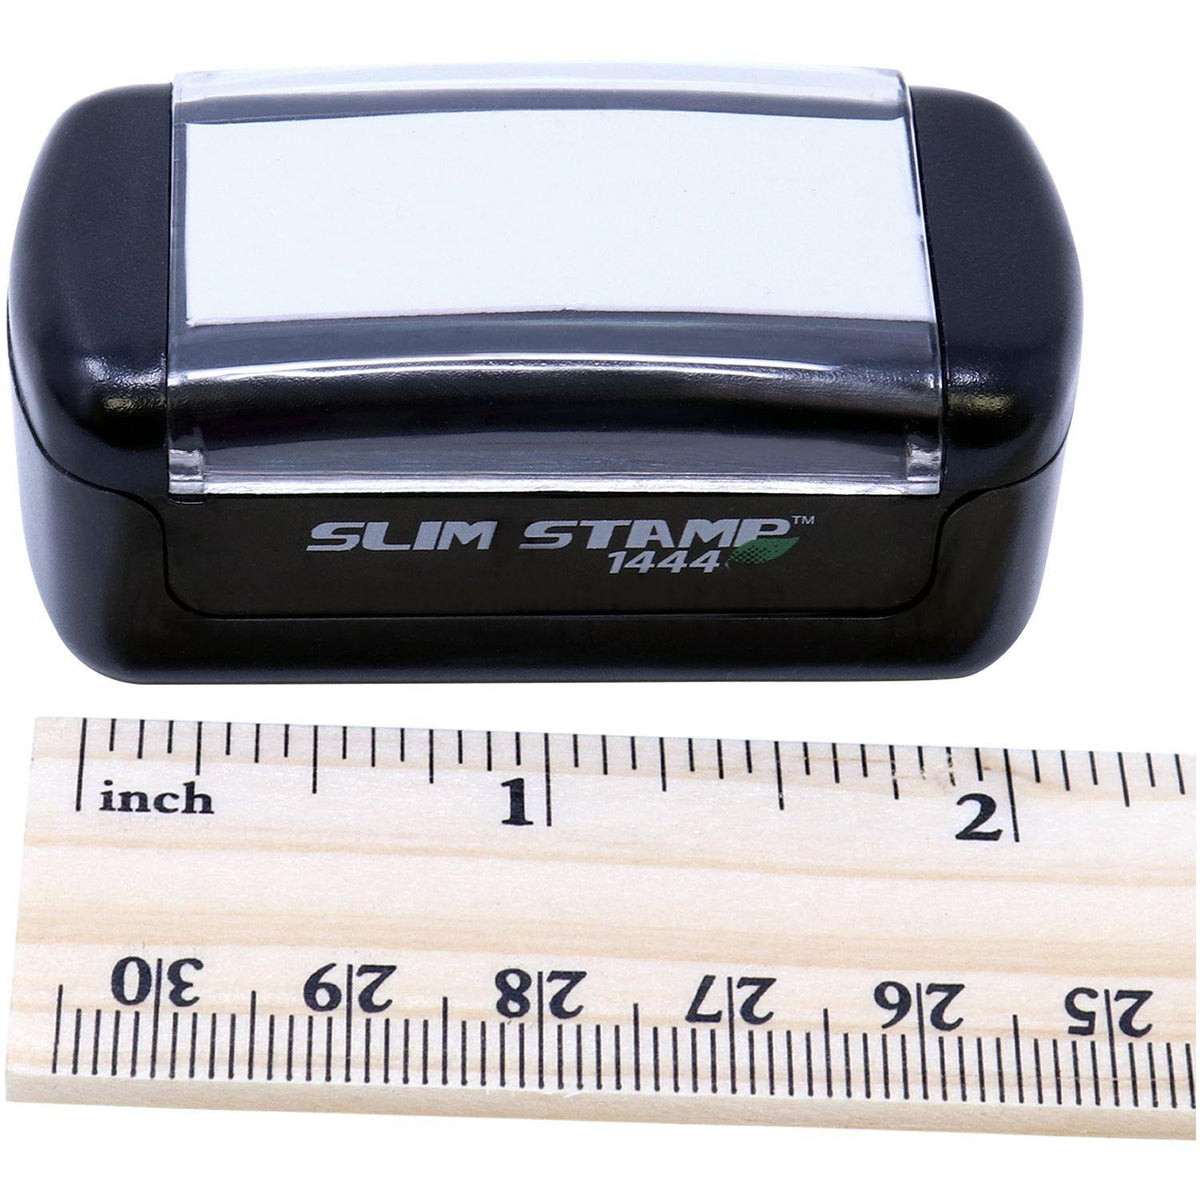 Measurement Slim Pre-Inked SAM Stamp with Ruler